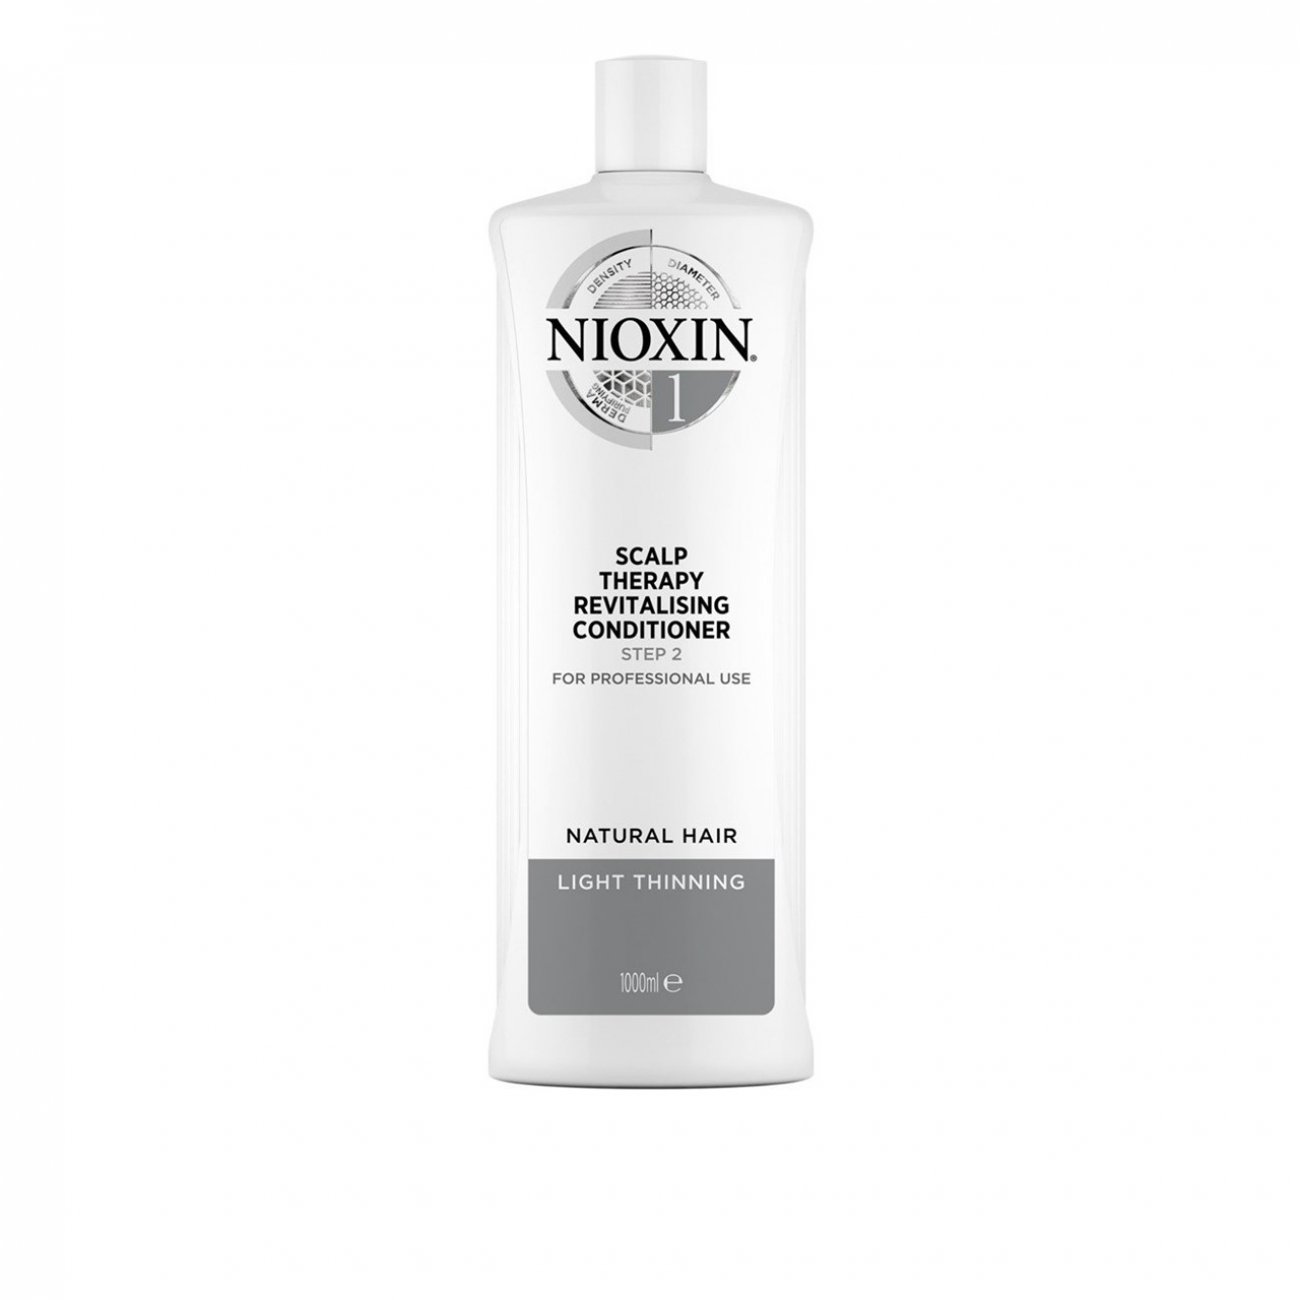 Kopen Nioxin System 1 Scalp Therapy Conditioner Nederland